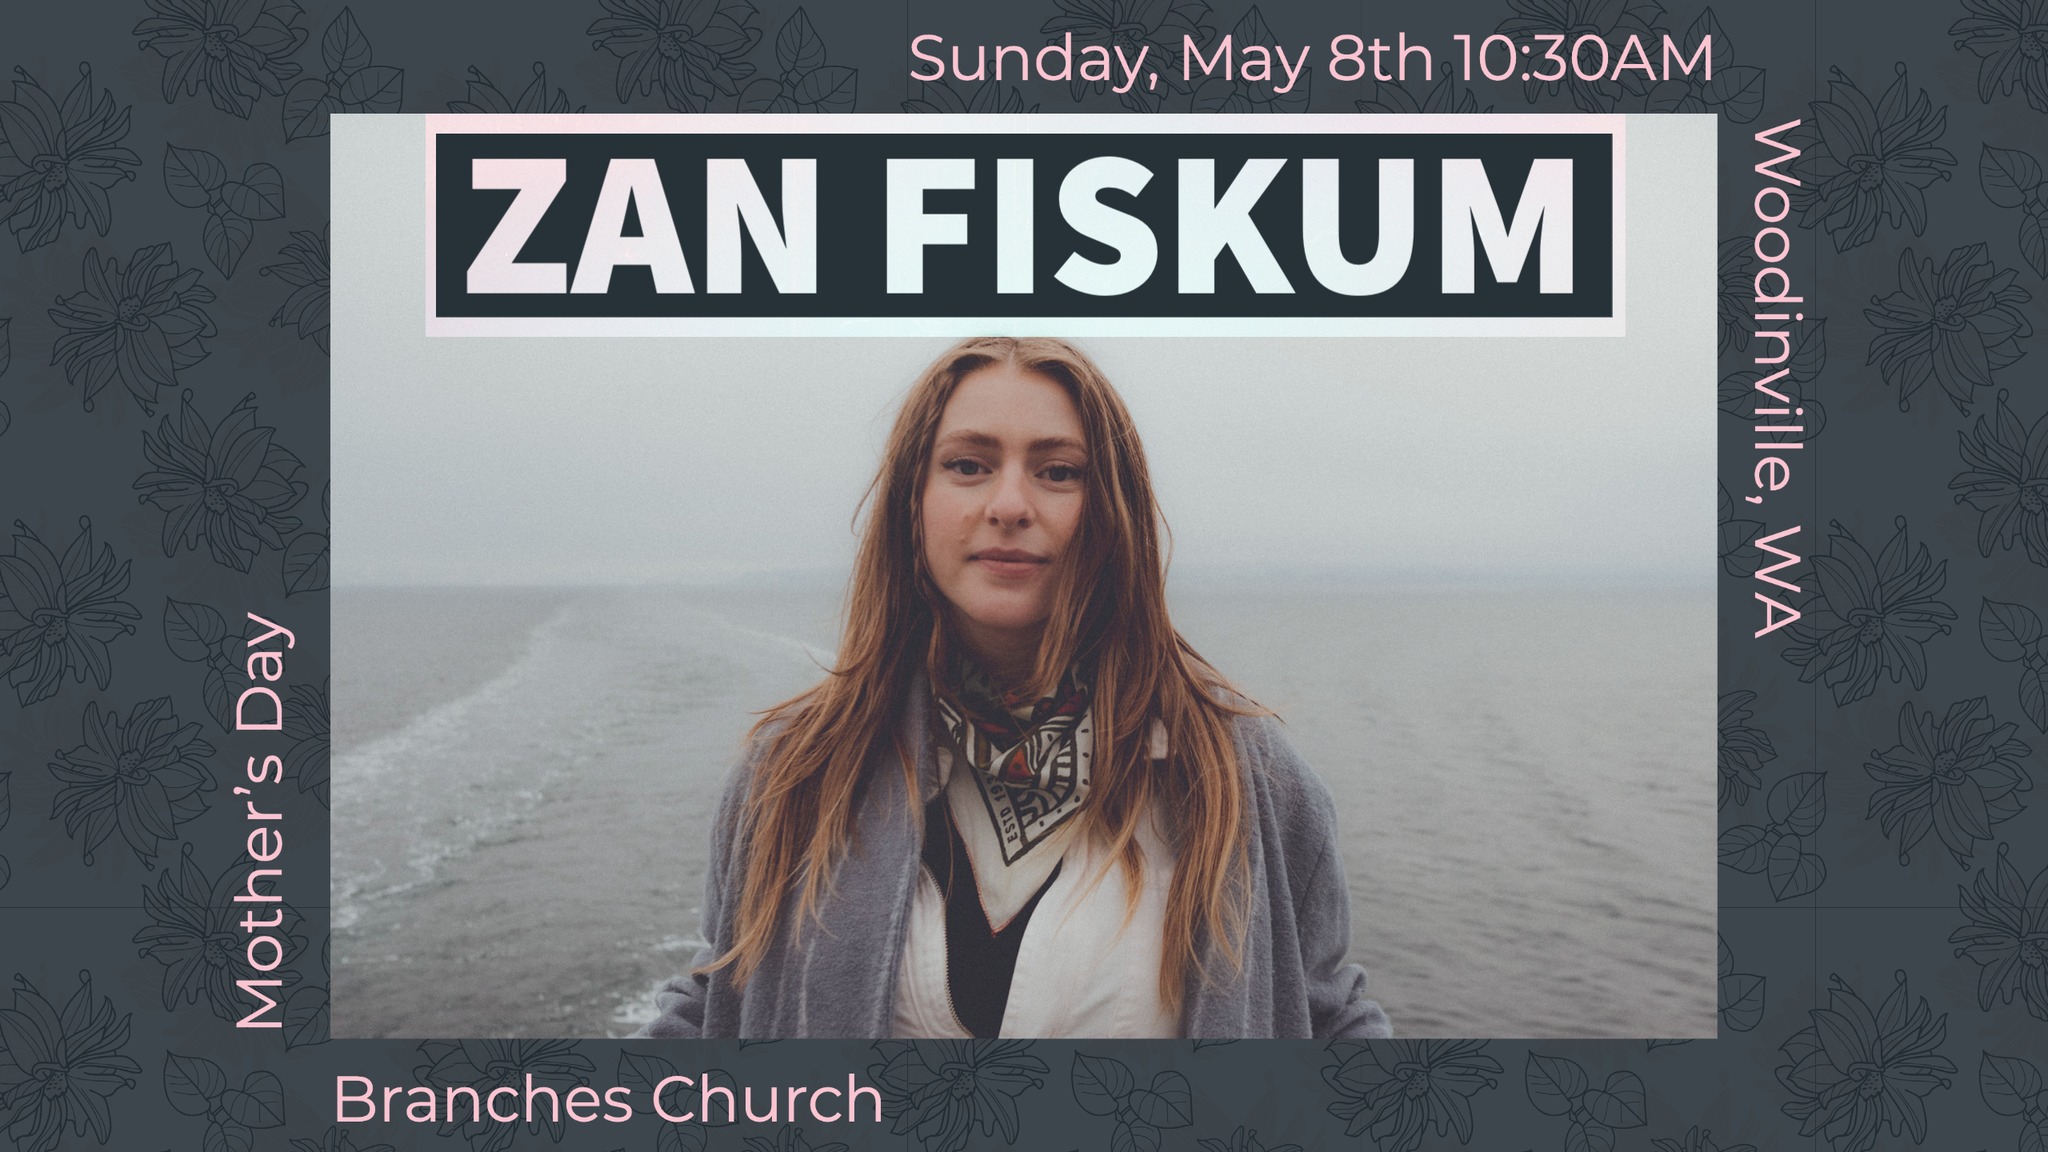 zan fiskum - branches church